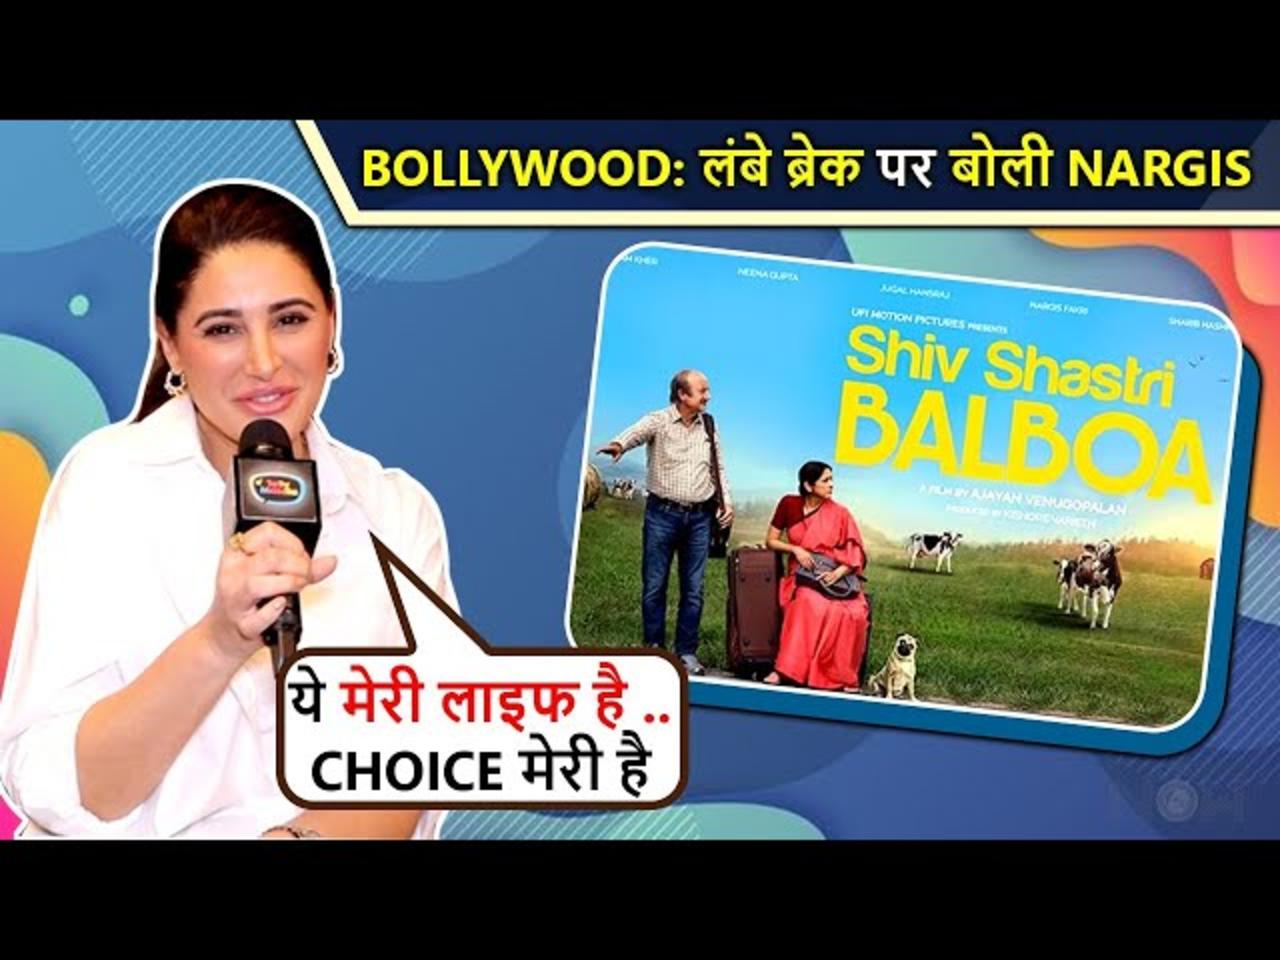 Shiv Shastri Balboa Nargis Fakhri On Her Comeback, Anupam In Nostalgia, Sharib Hashmi On His Role